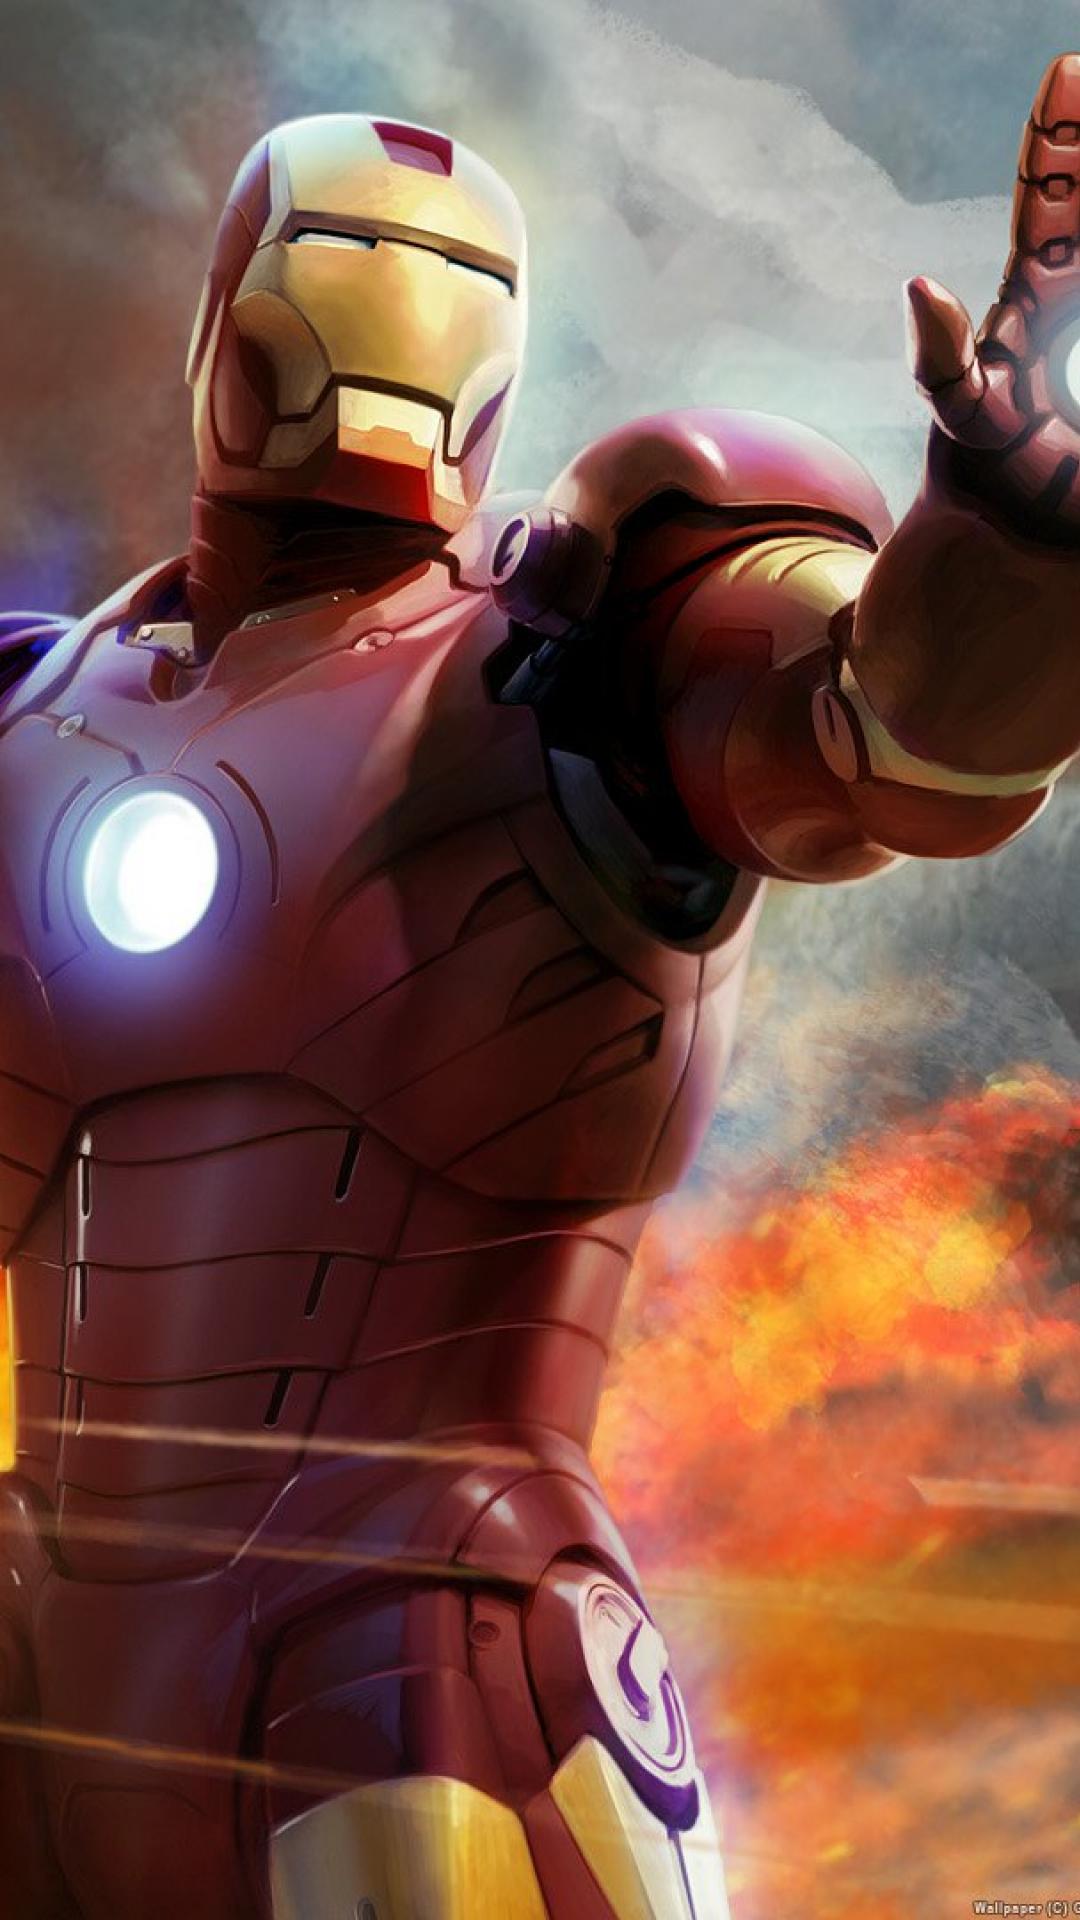 Iron Man Armor Technology 4K wallpaper download